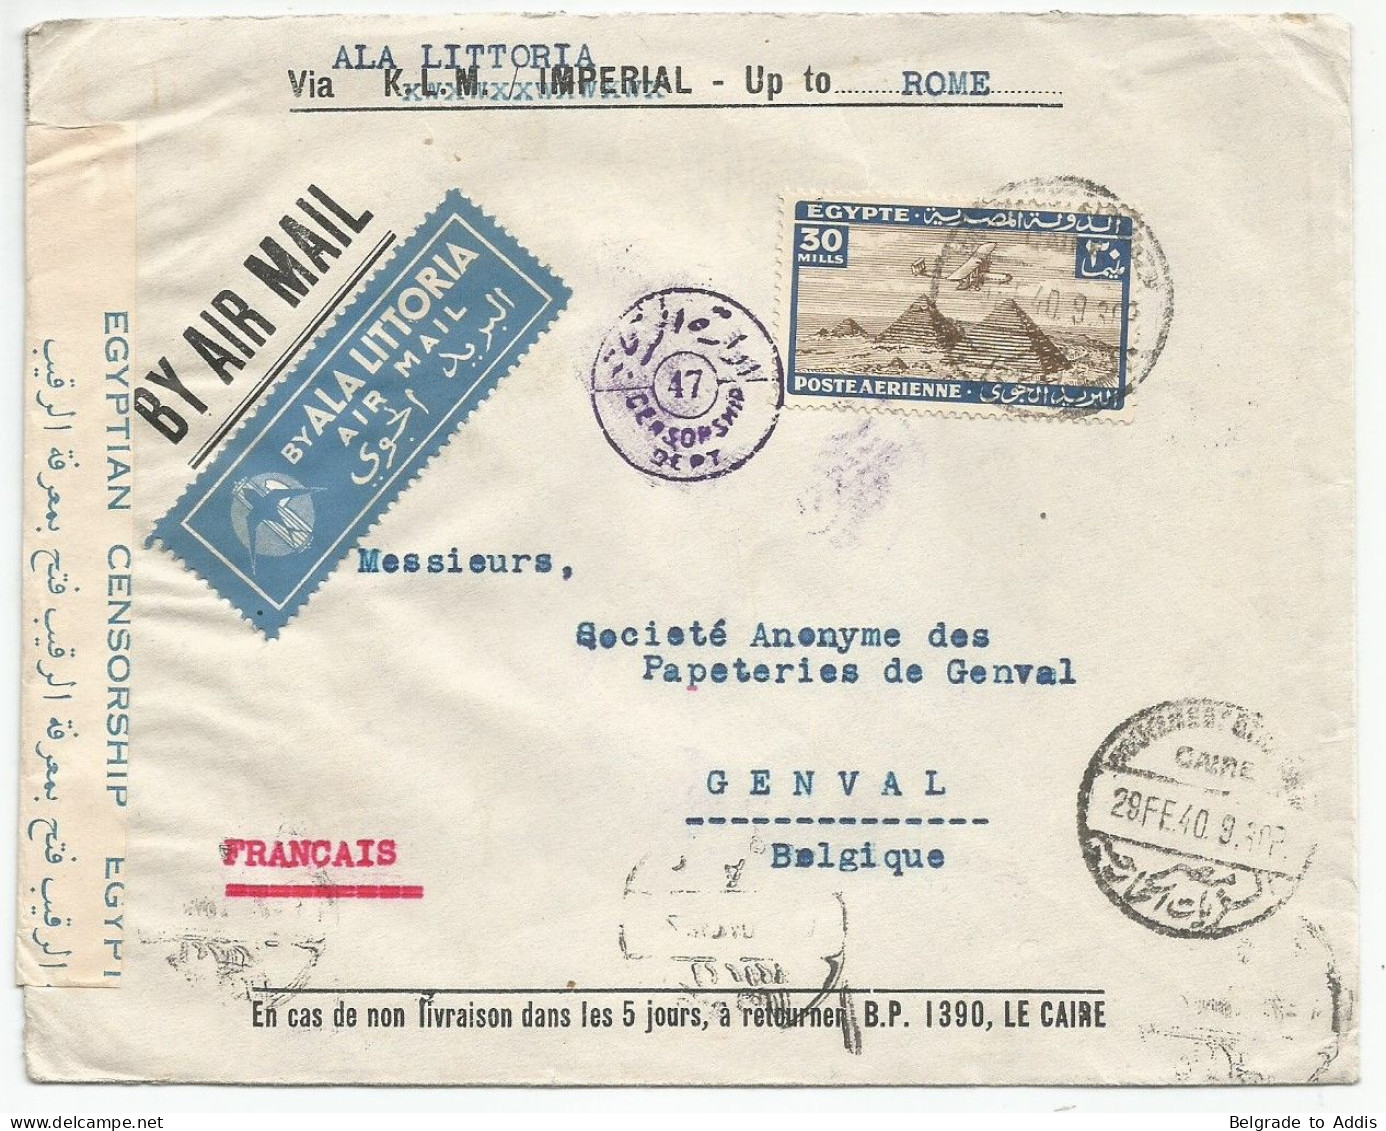 Egypt Air Mail Censored Cover Sent By ALA LITTORIA Via Roma Italy To Belgium 1940 - Poste Aérienne